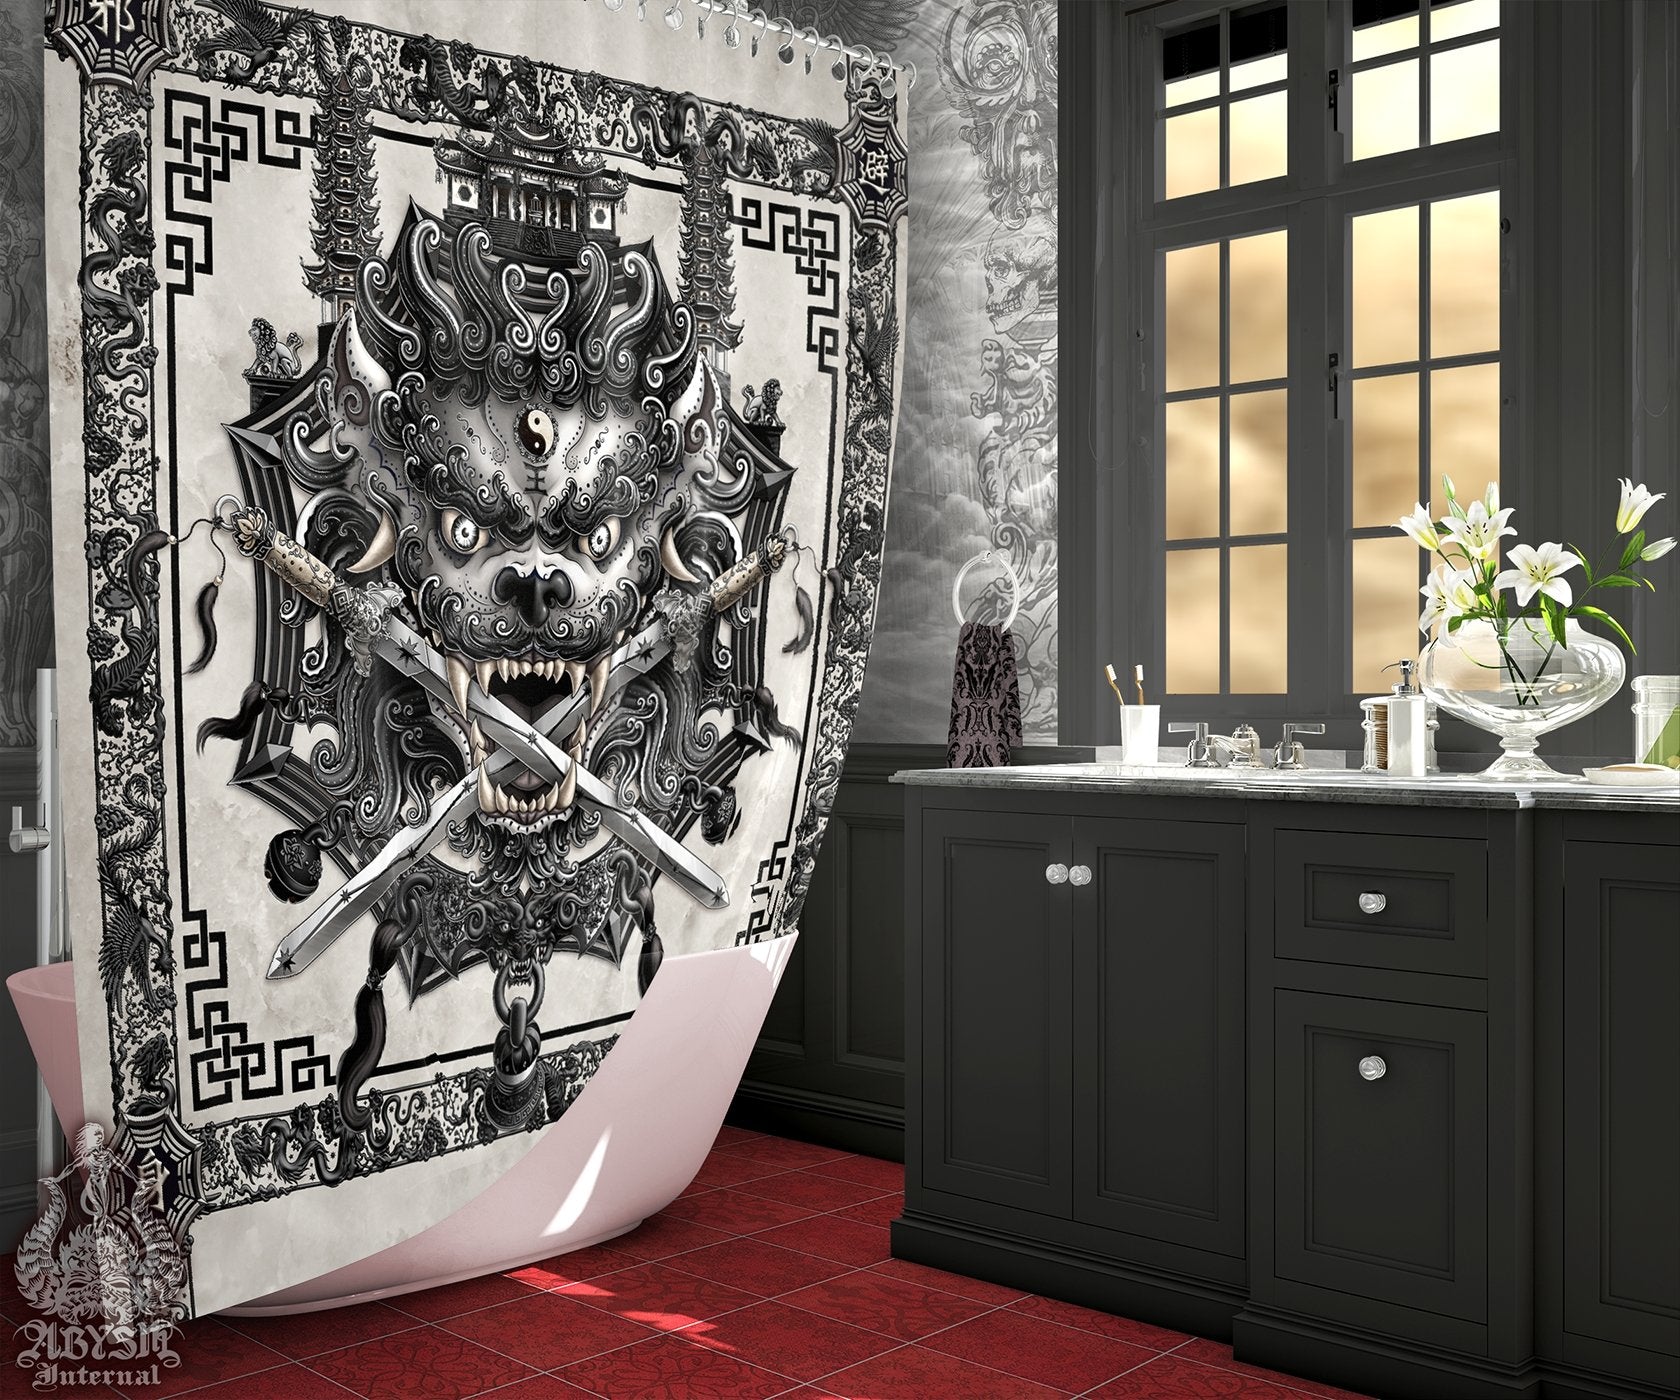 Lion Shower Curtain, Taiwan Sword Lion, Chinese Bathroom, Alternative Fantasy Decor, Asian Mythology - Black and White Goth - Abysm Internal